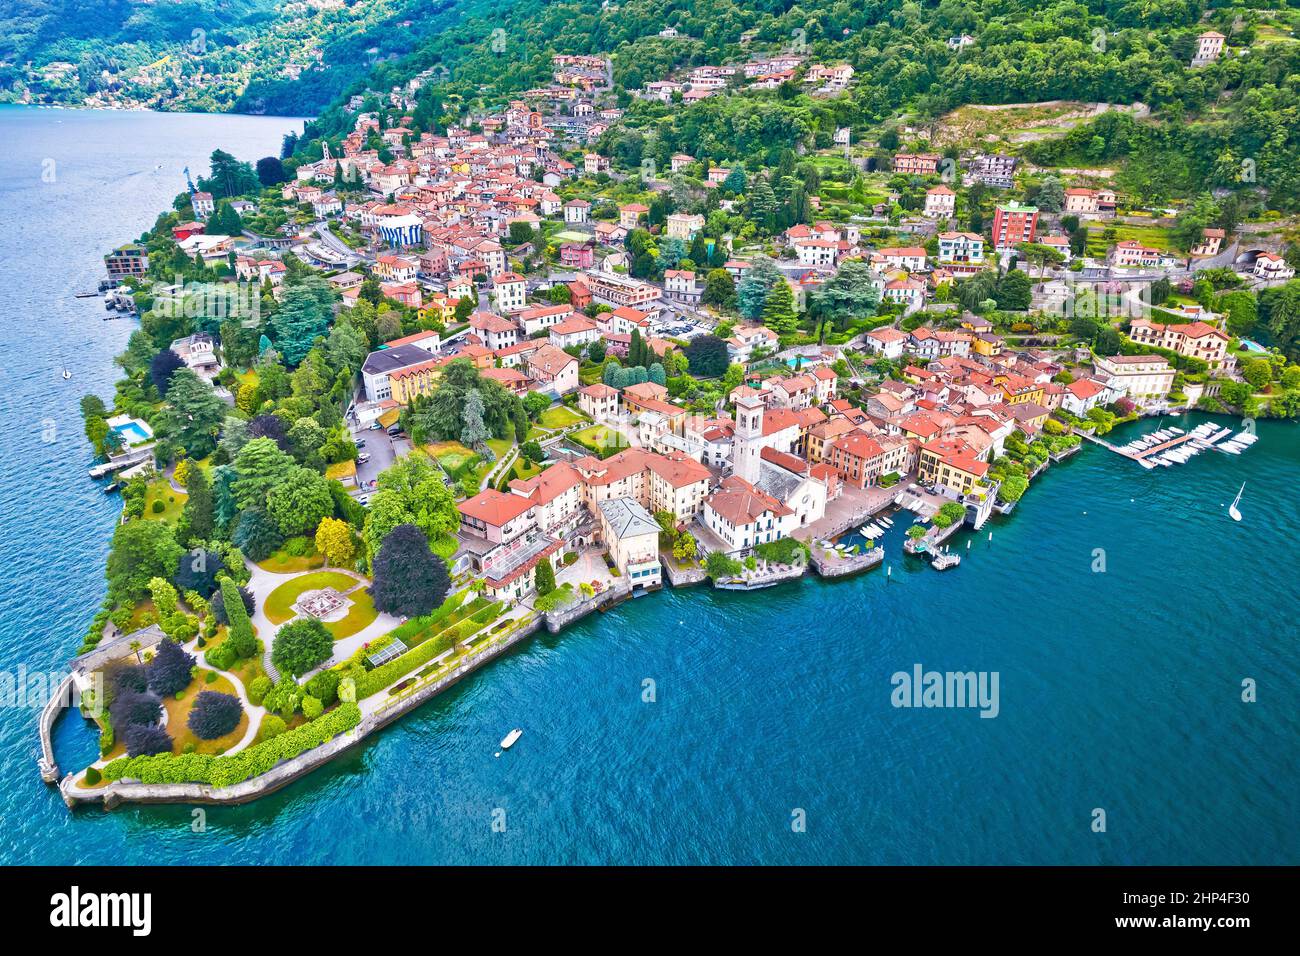 Stadt Torno am Comer See Luftbild, Lombardei Region von Italien Stockfoto